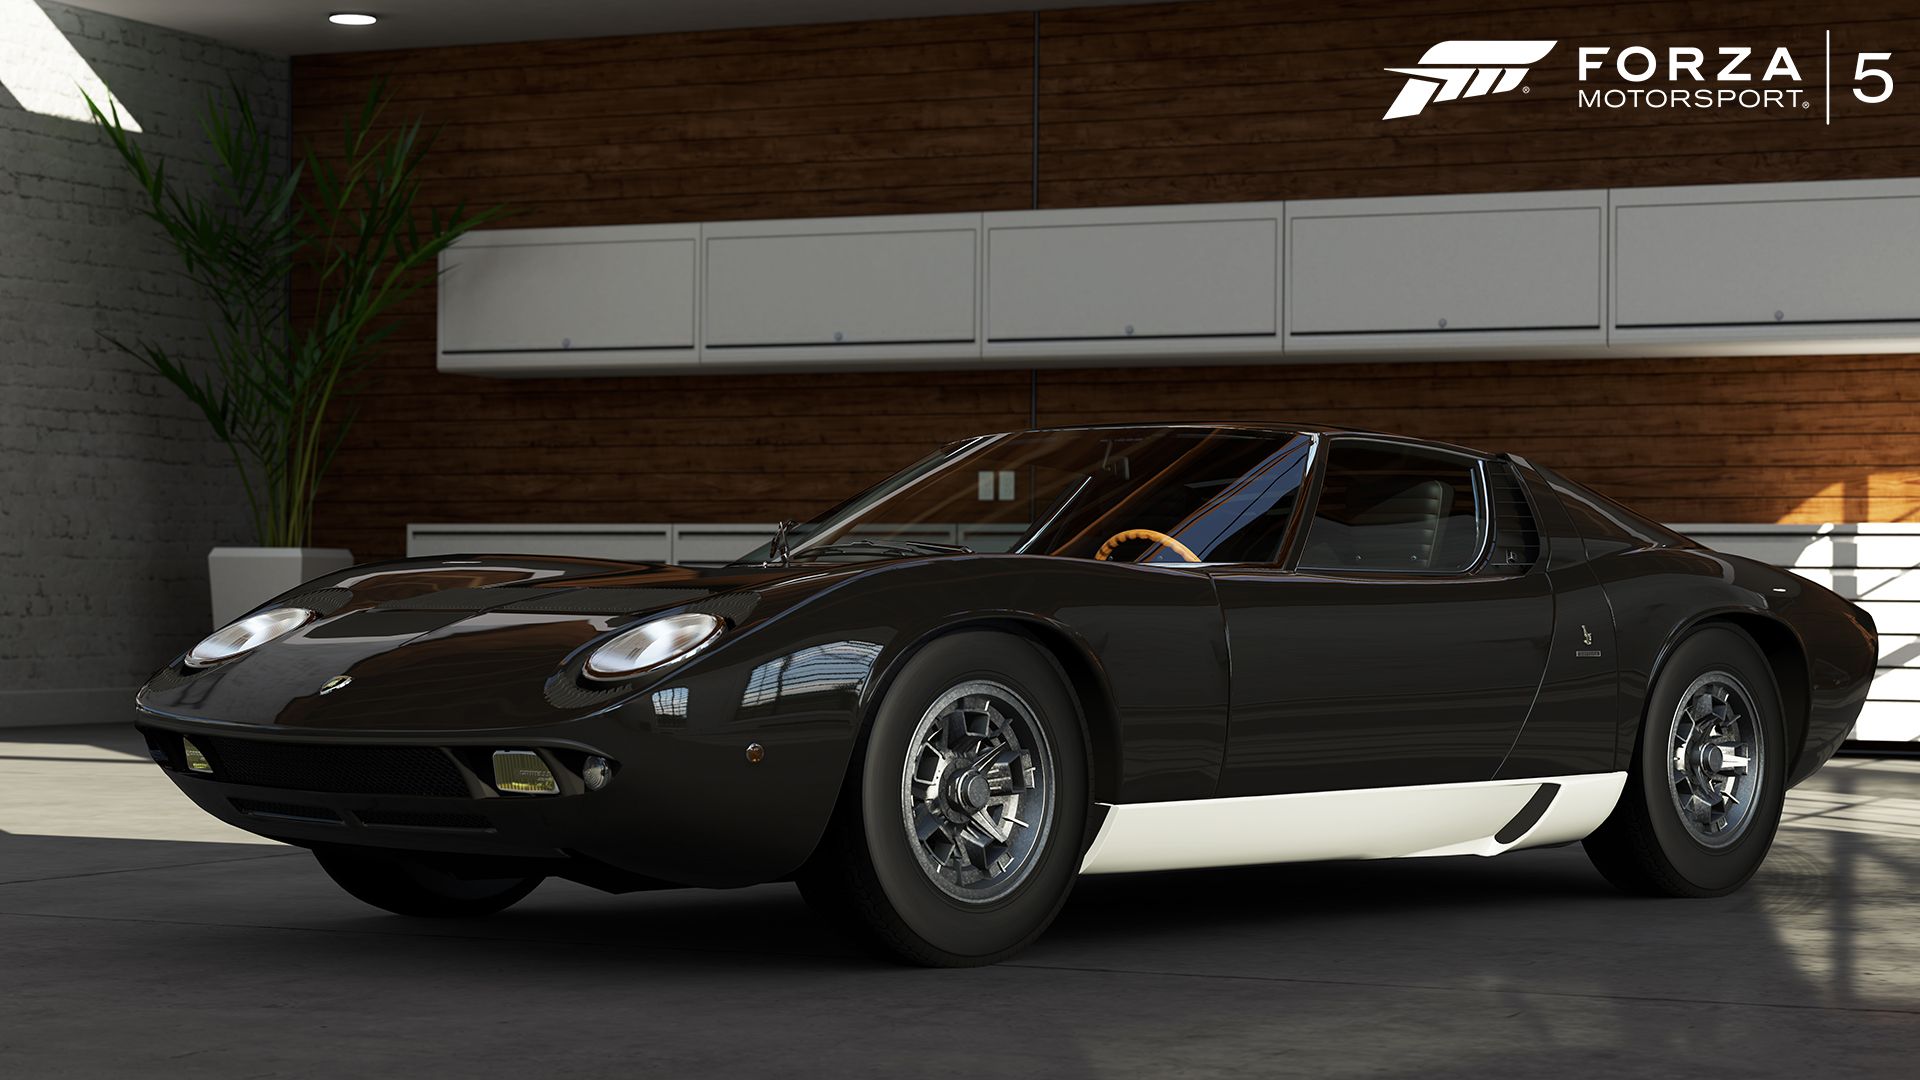 Forza-Motorsport-5-Gets-Gorgeous-Batch-of-Screenshots-394385-7.jpg